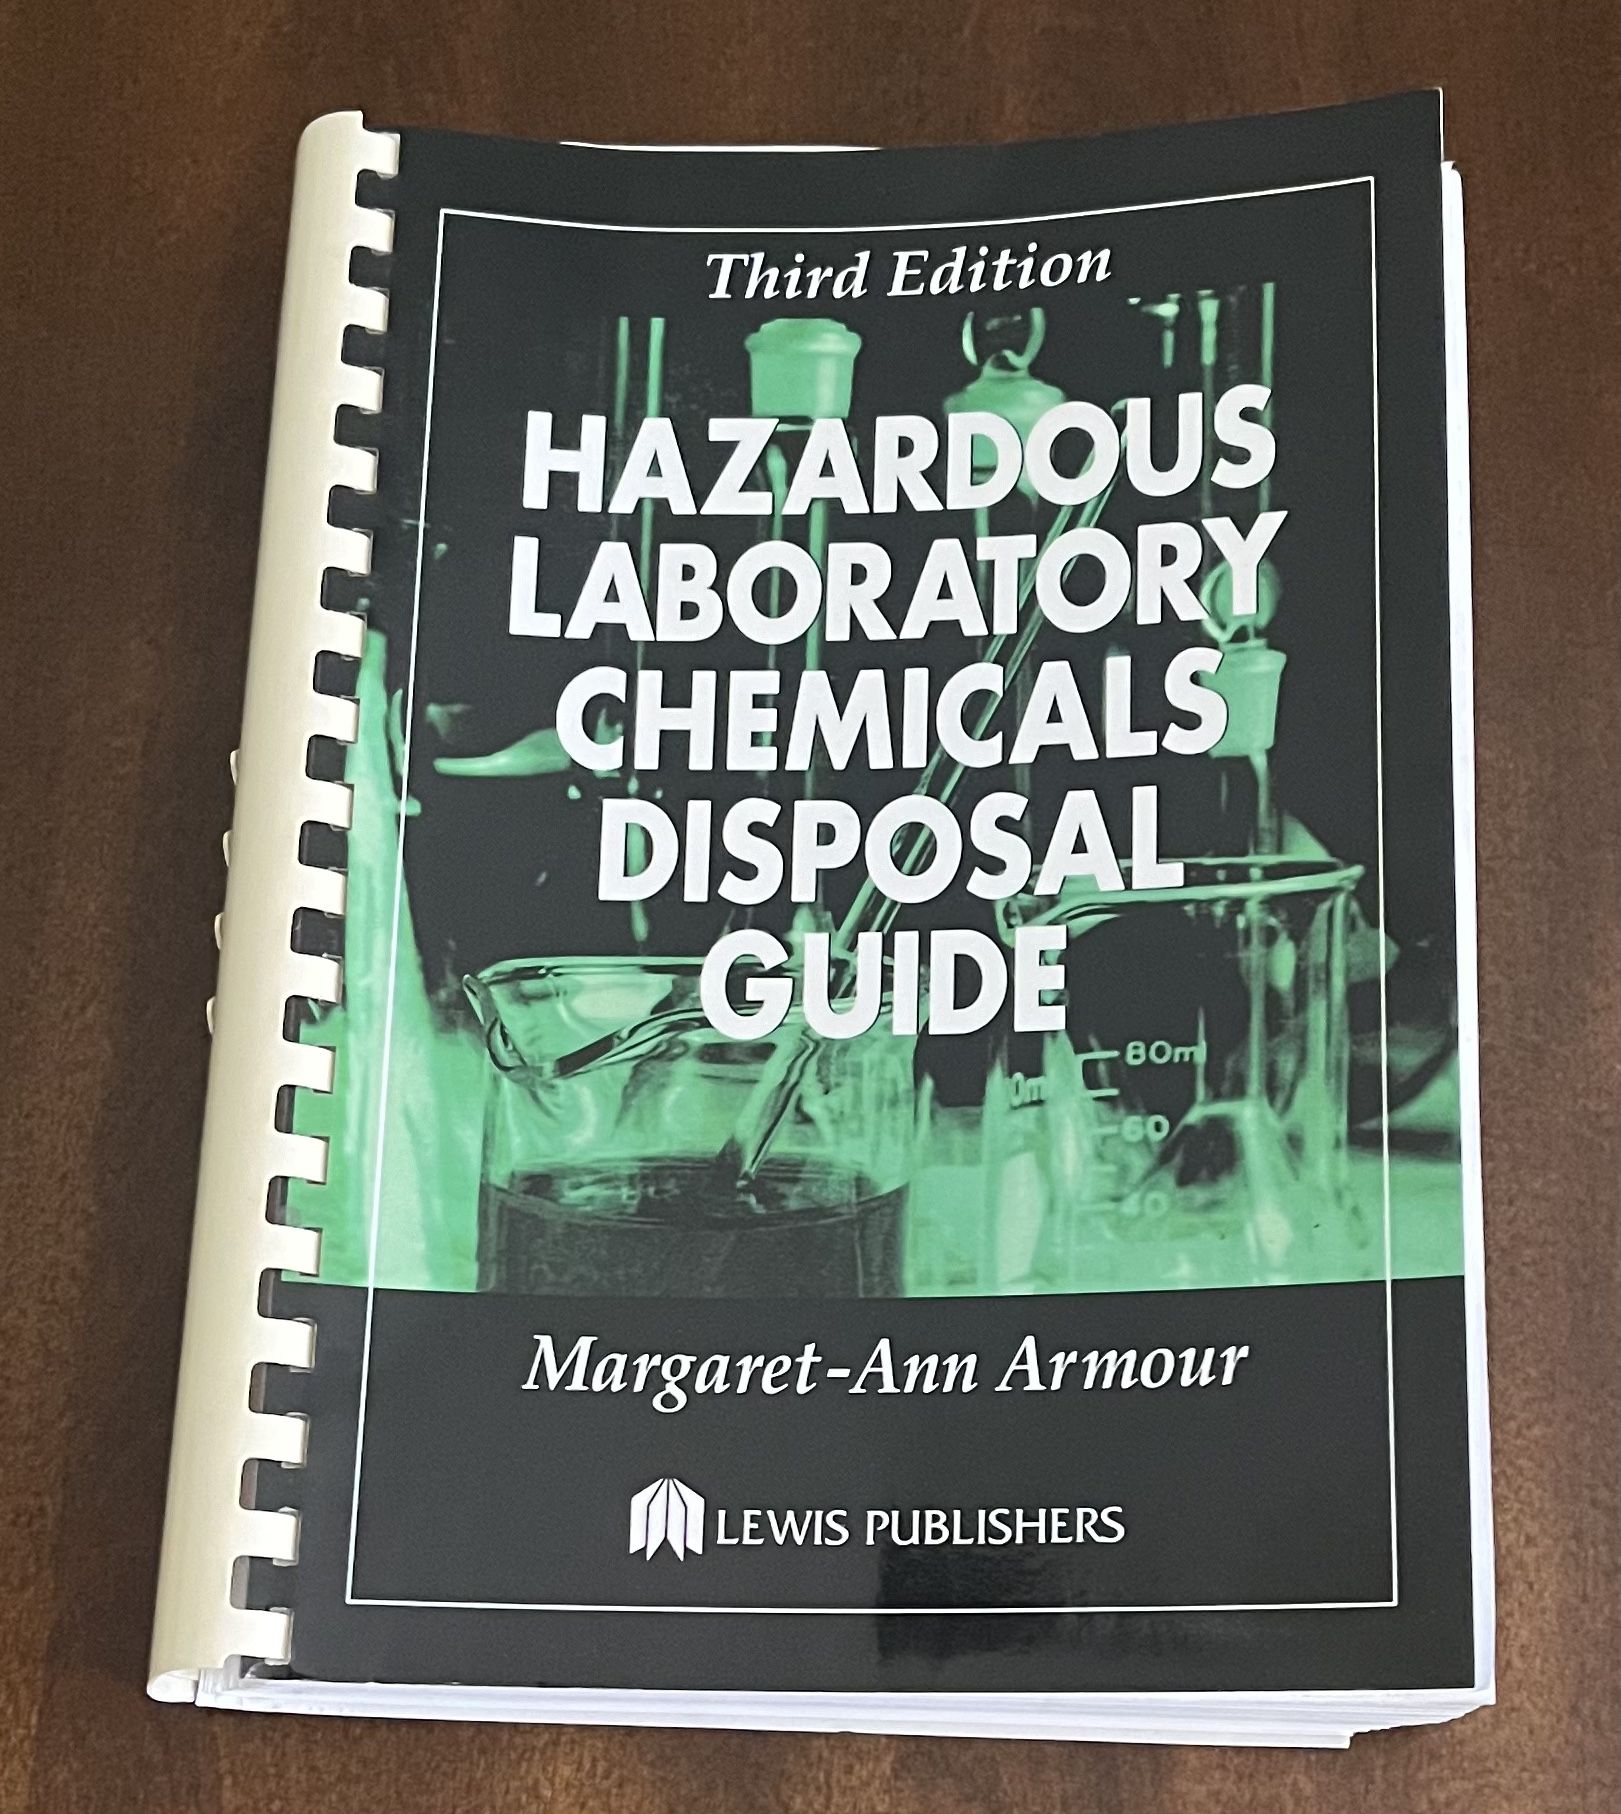 Hazardous Laboratory Chemicals Disposal Guide, Third Edition  - Margaret-Ann Armour 